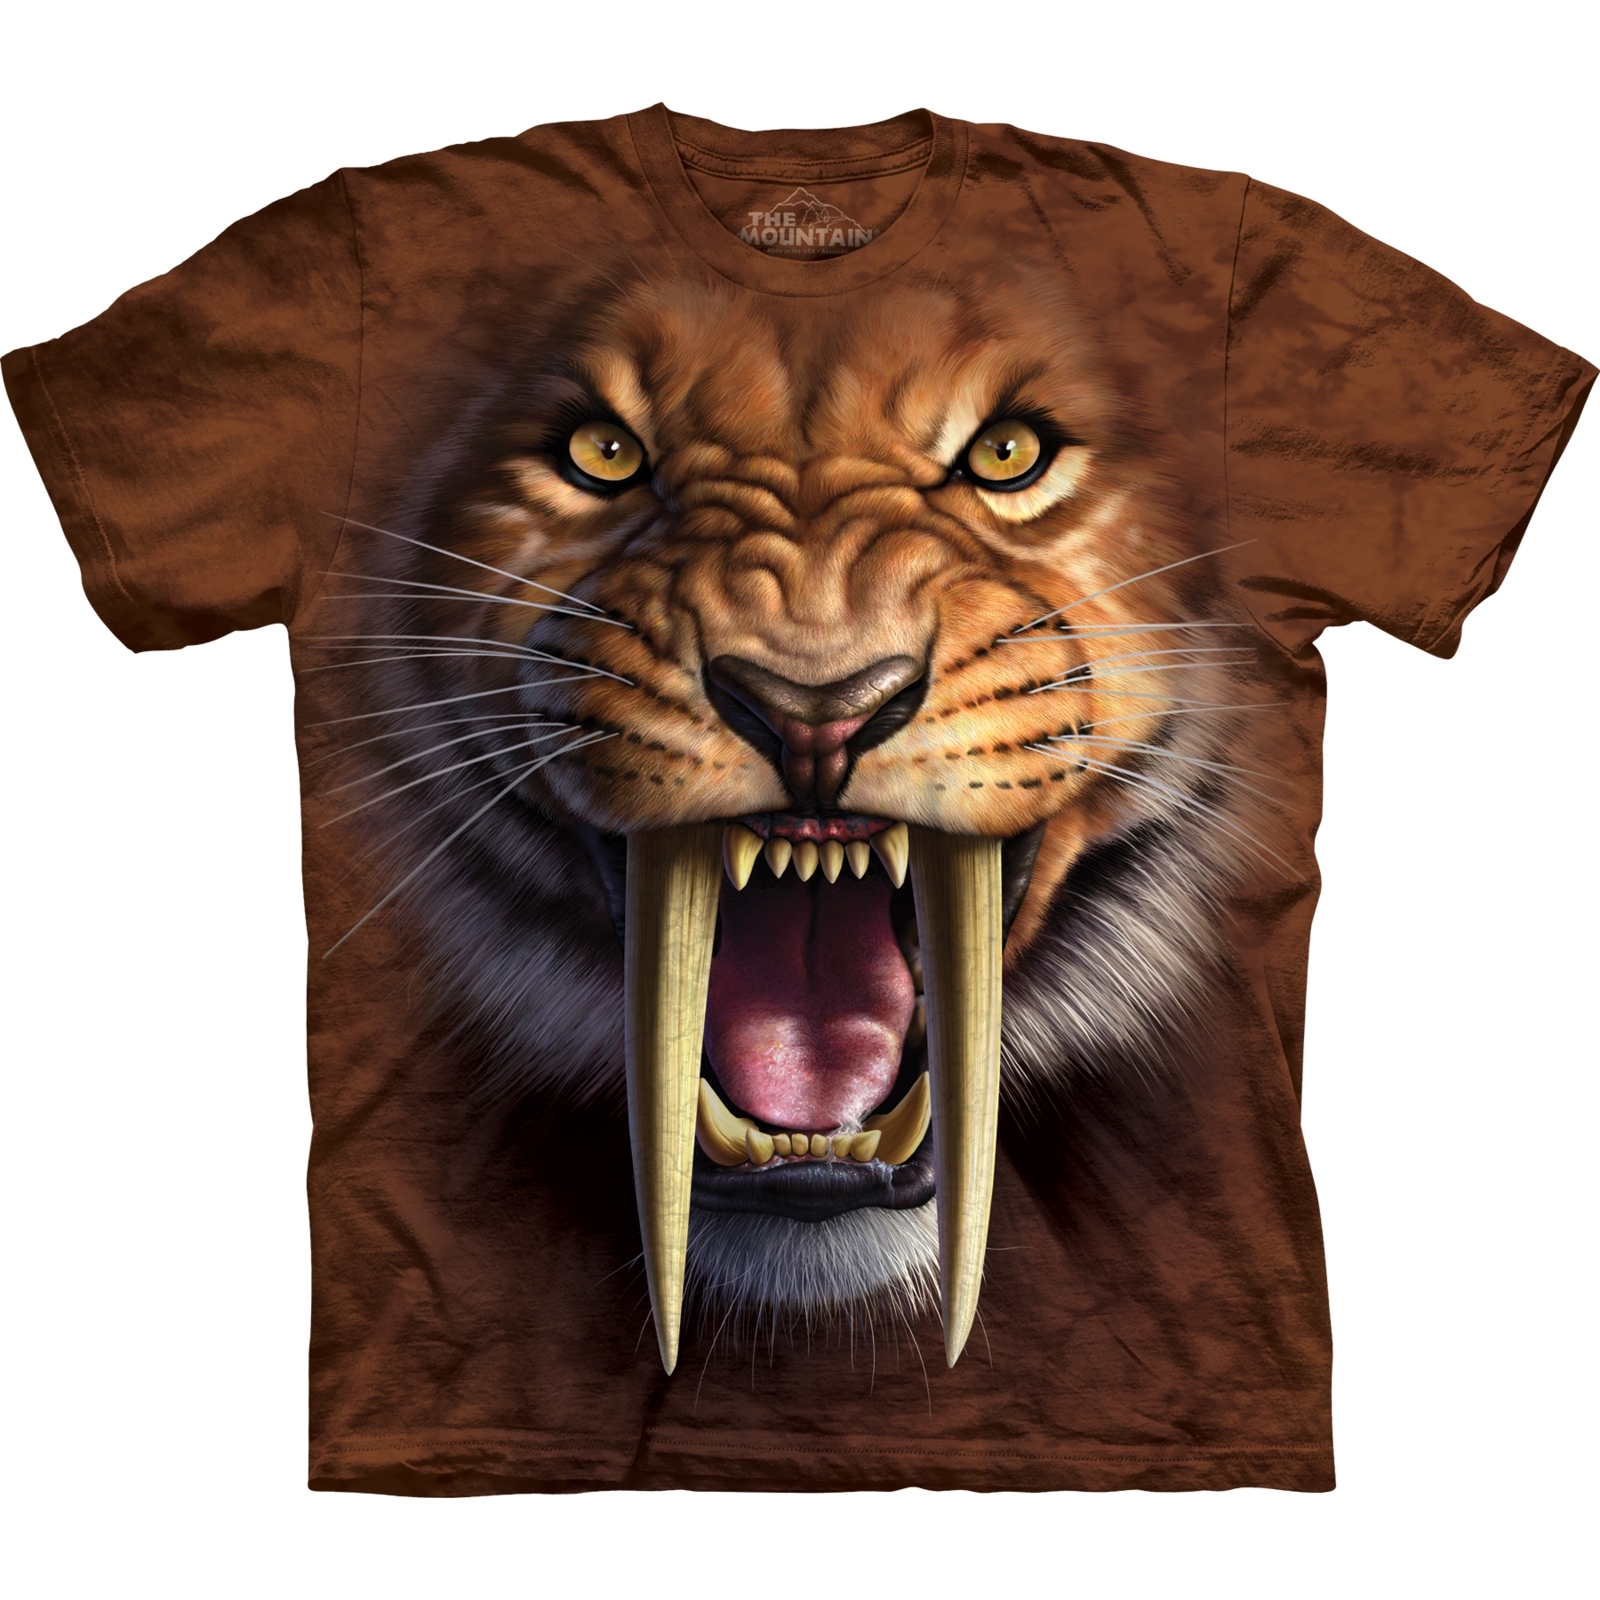 Mountain Саблезубый тигр футболка